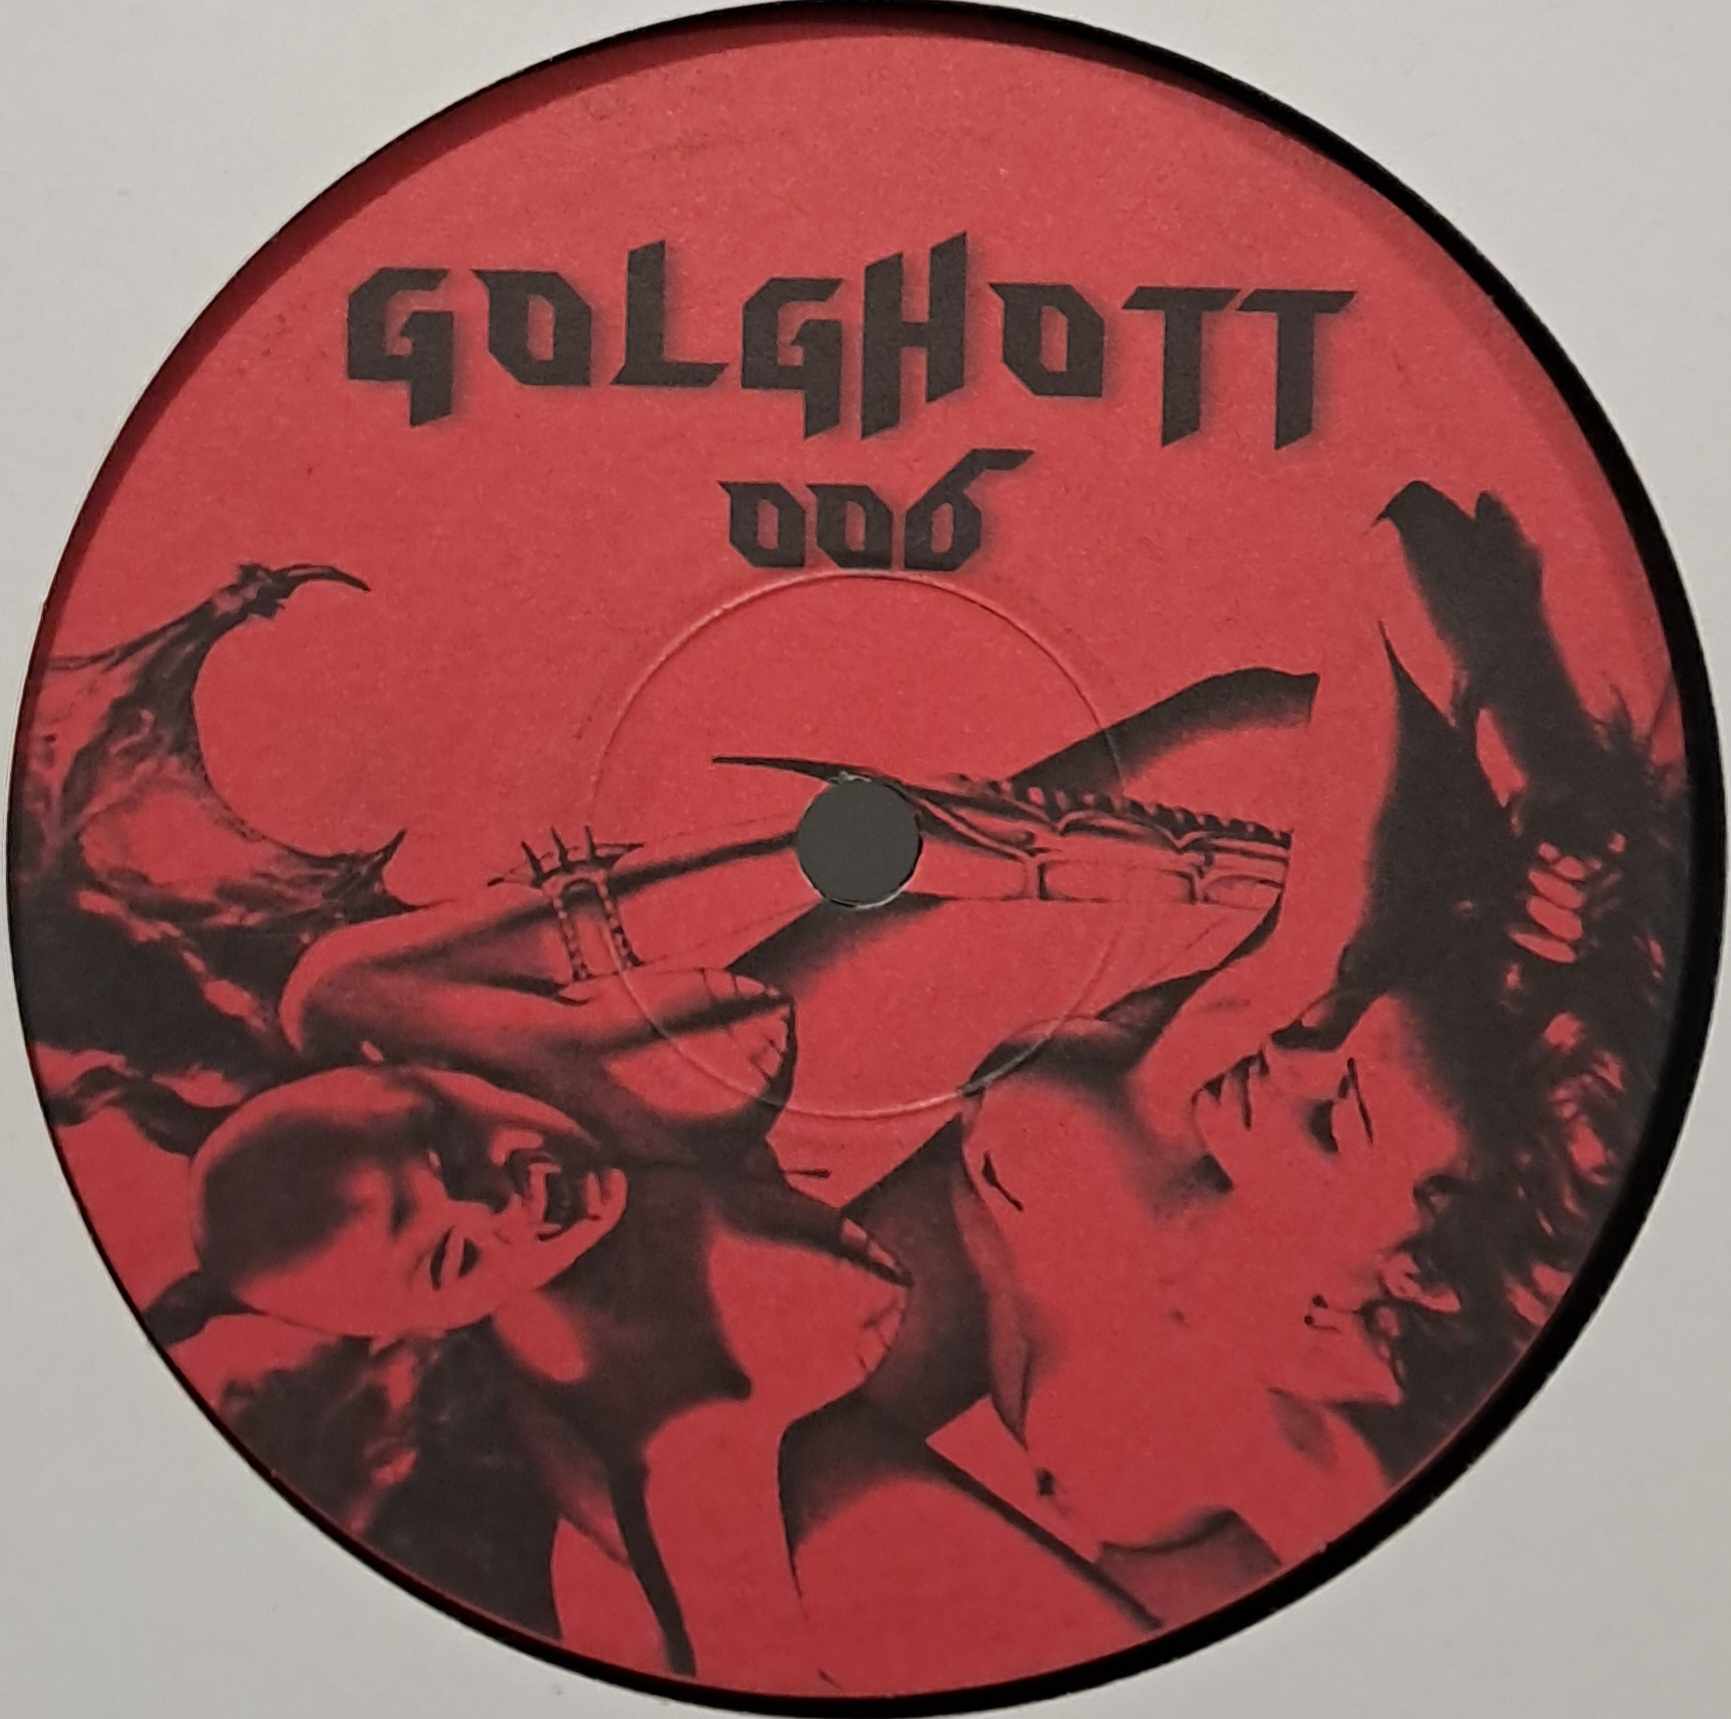 Golghott 06 - vinyle hardcore